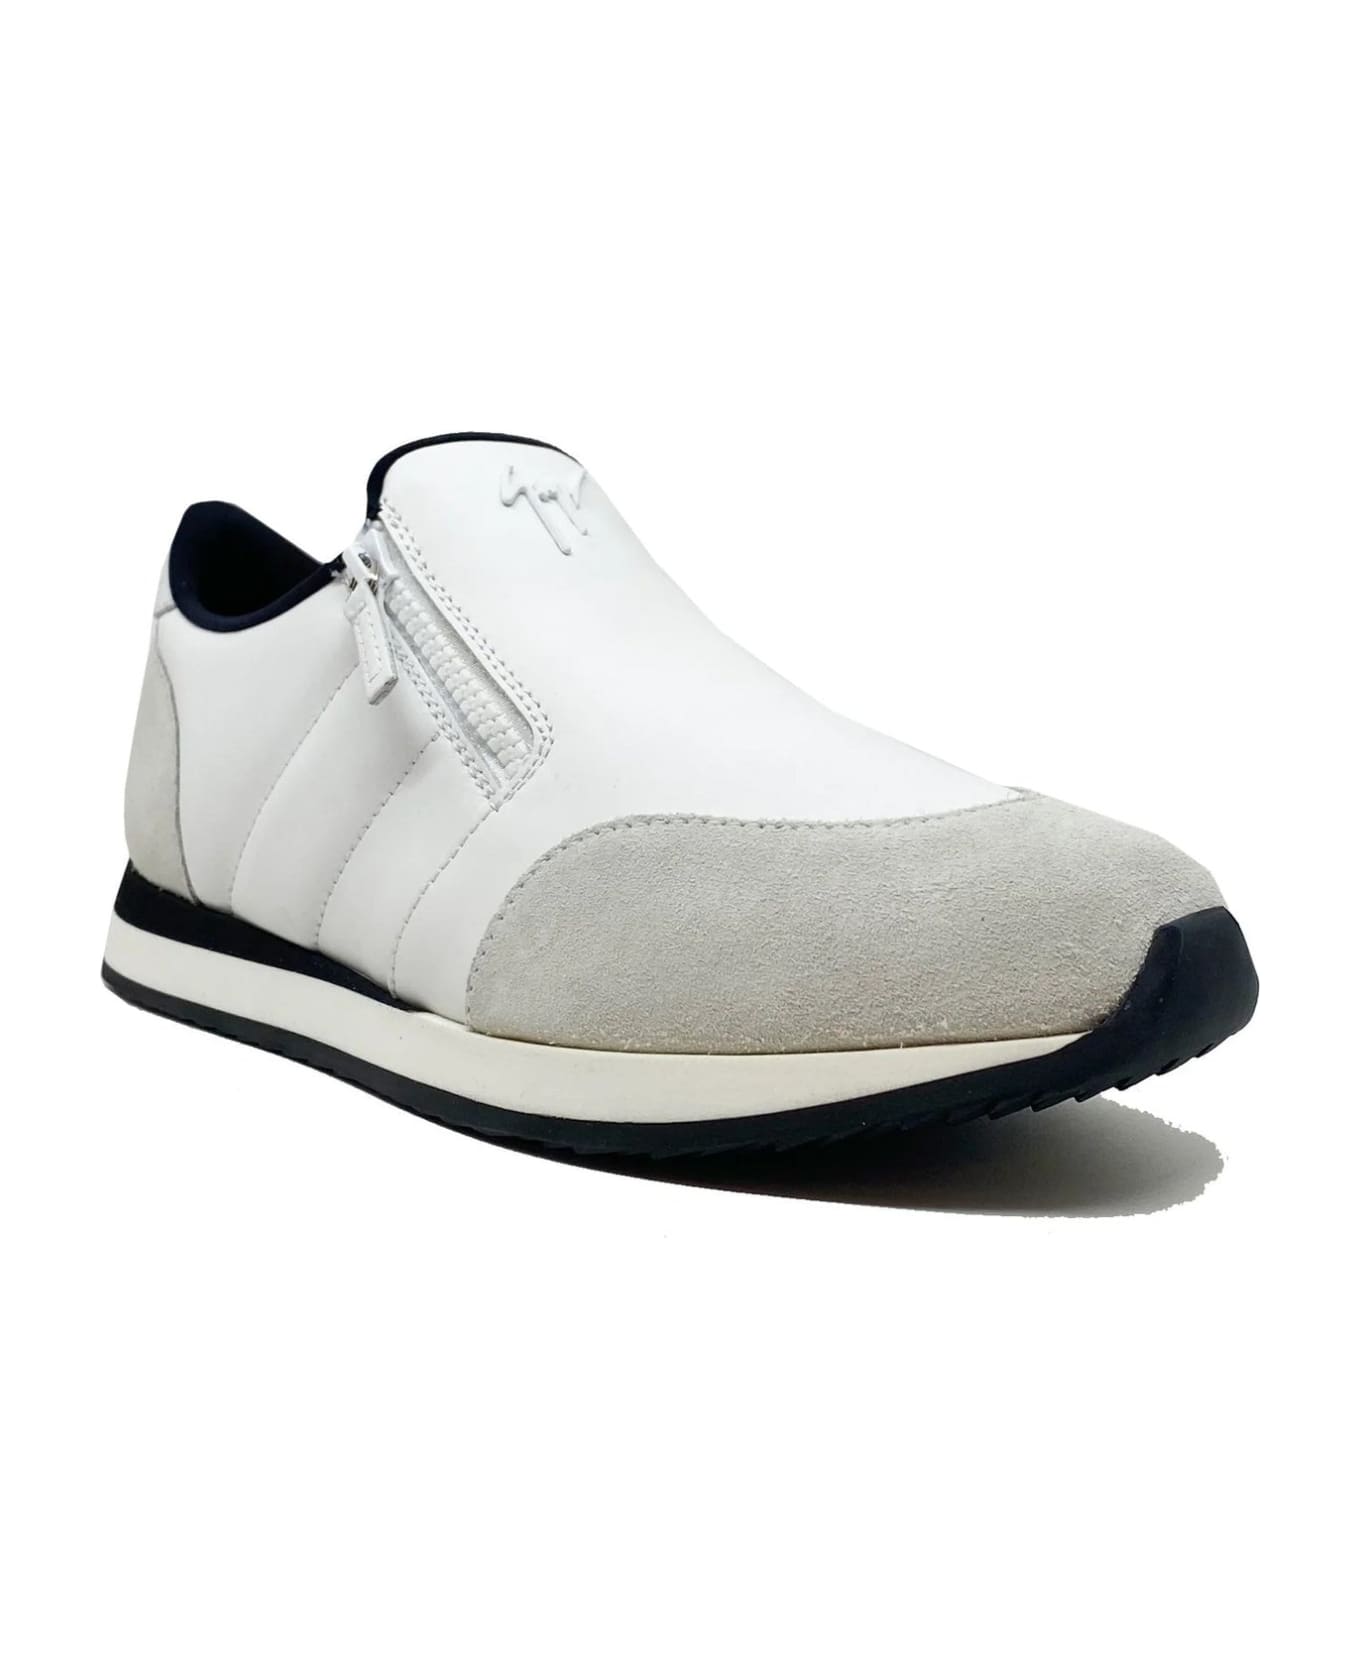 Giuseppe Zanotti Design Ulan Leather Sneakers - White